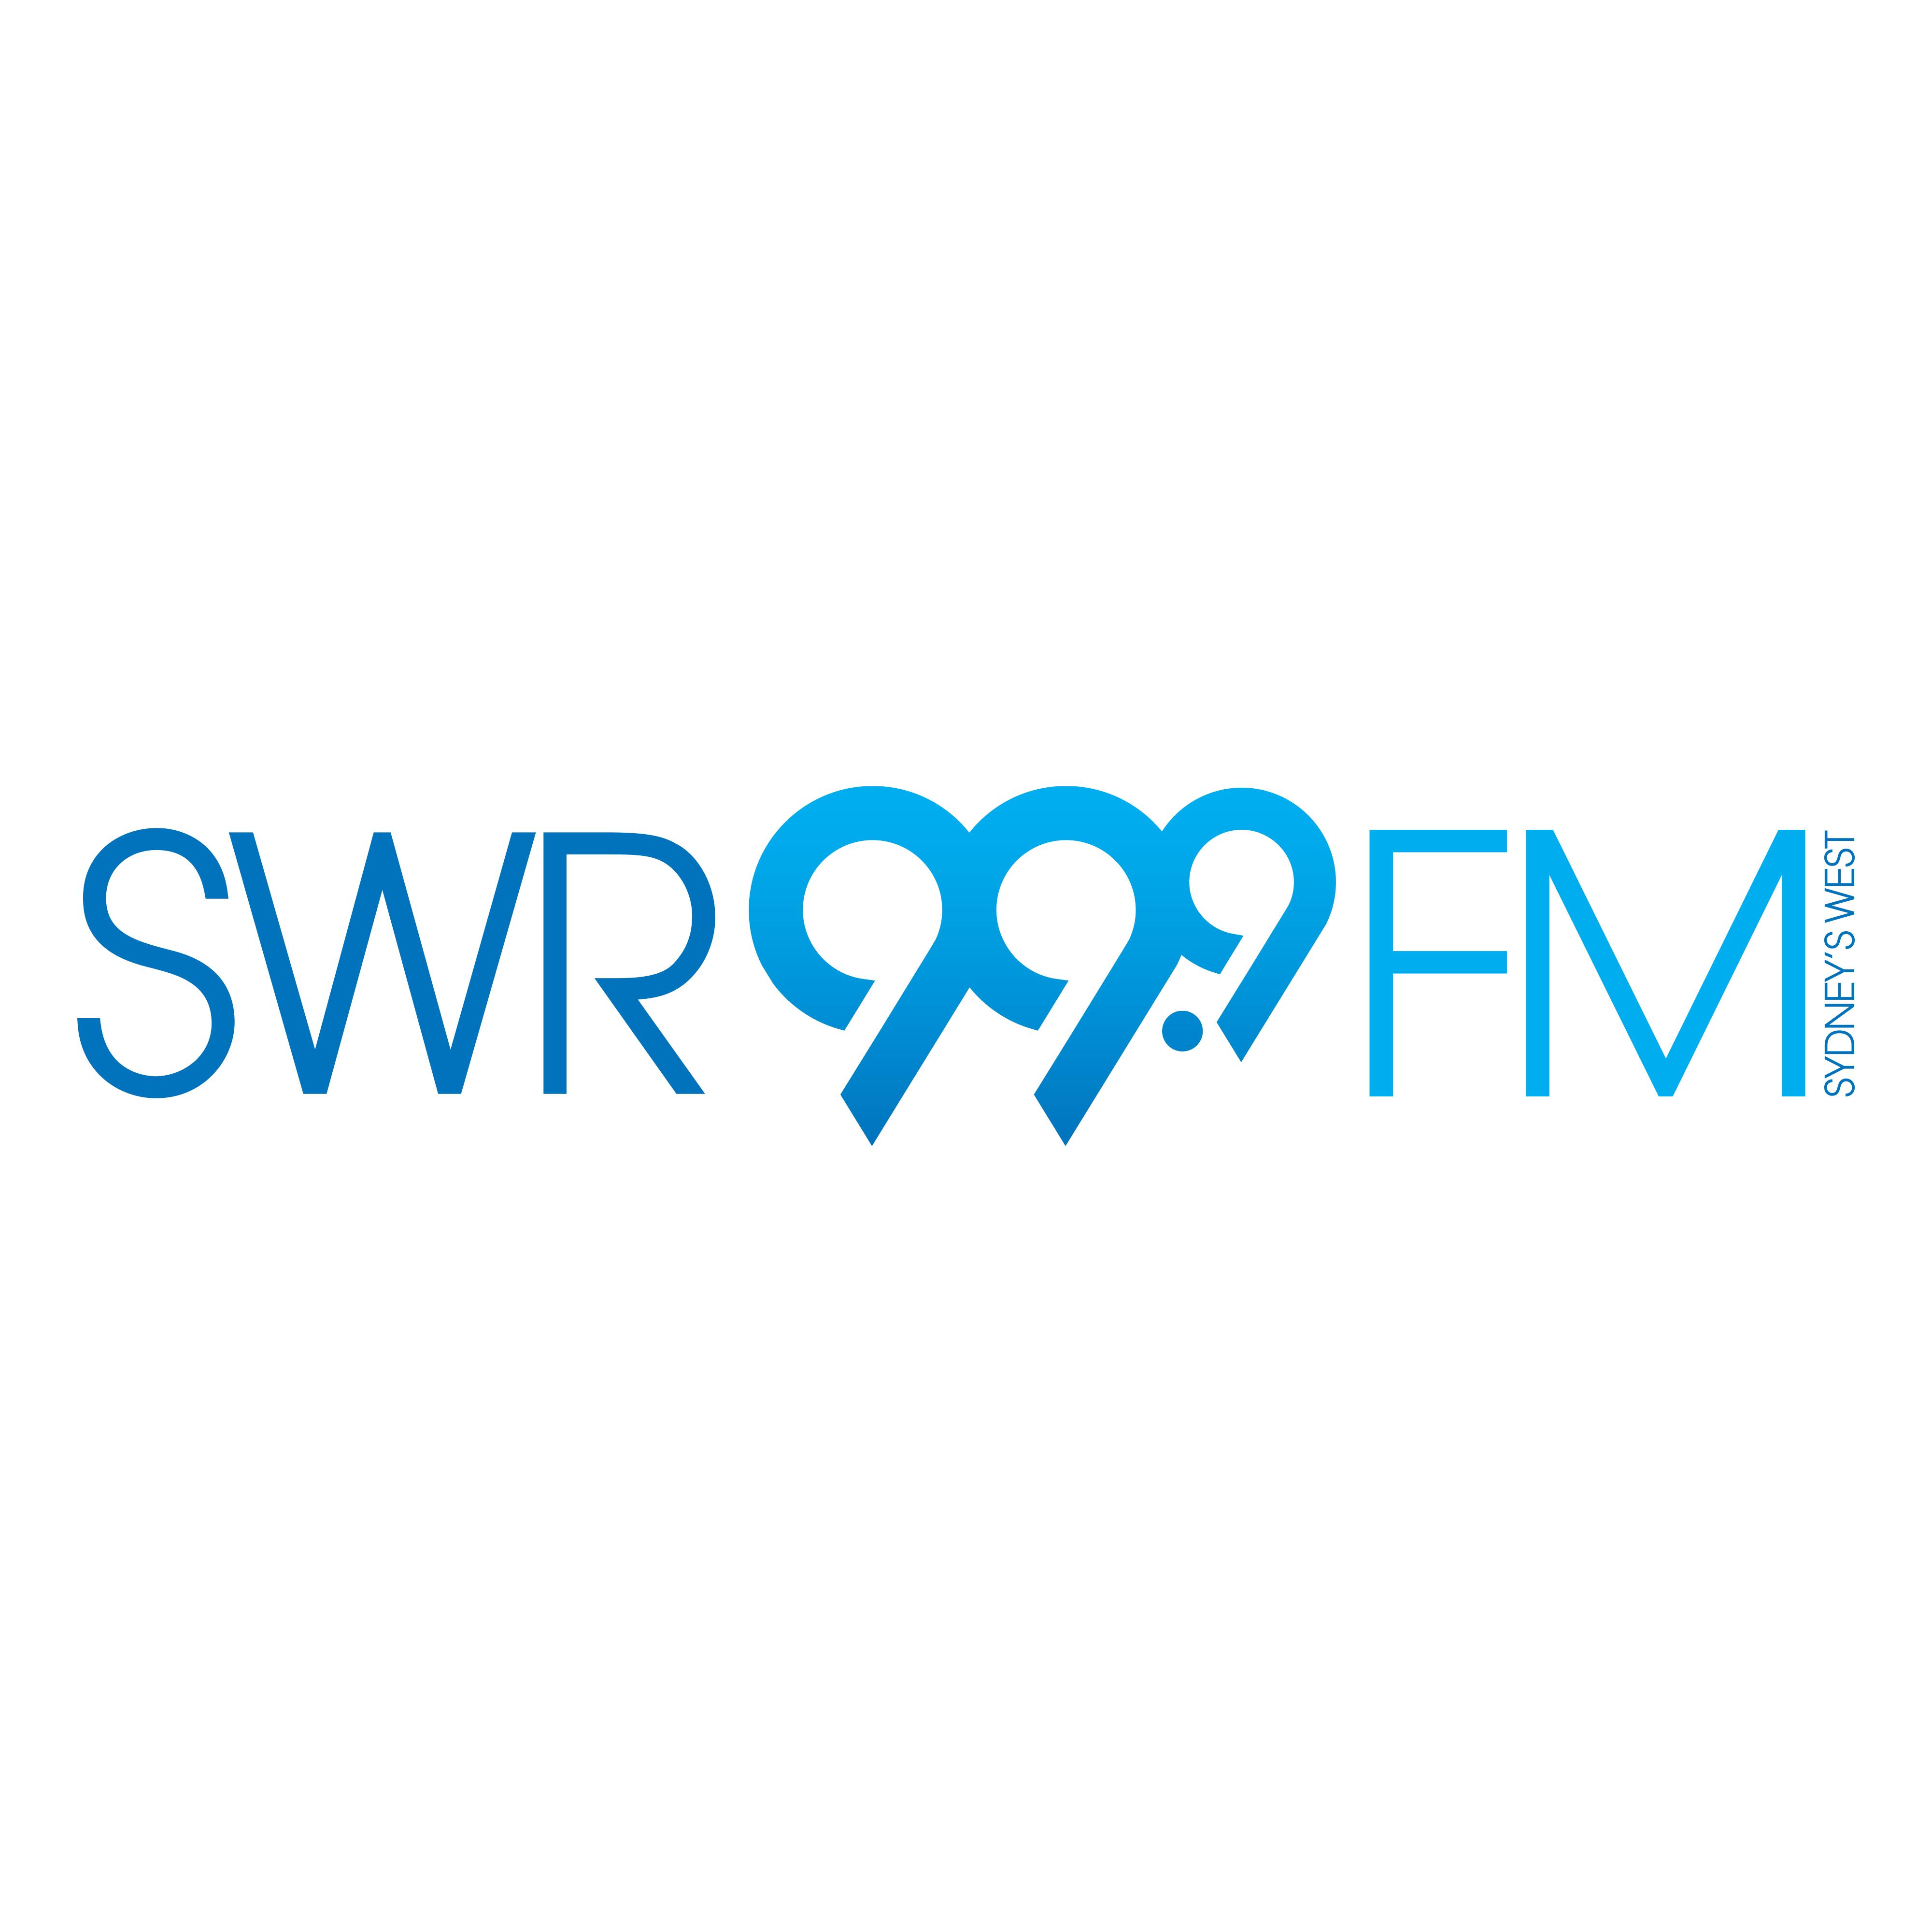 SWR 99.9 FM